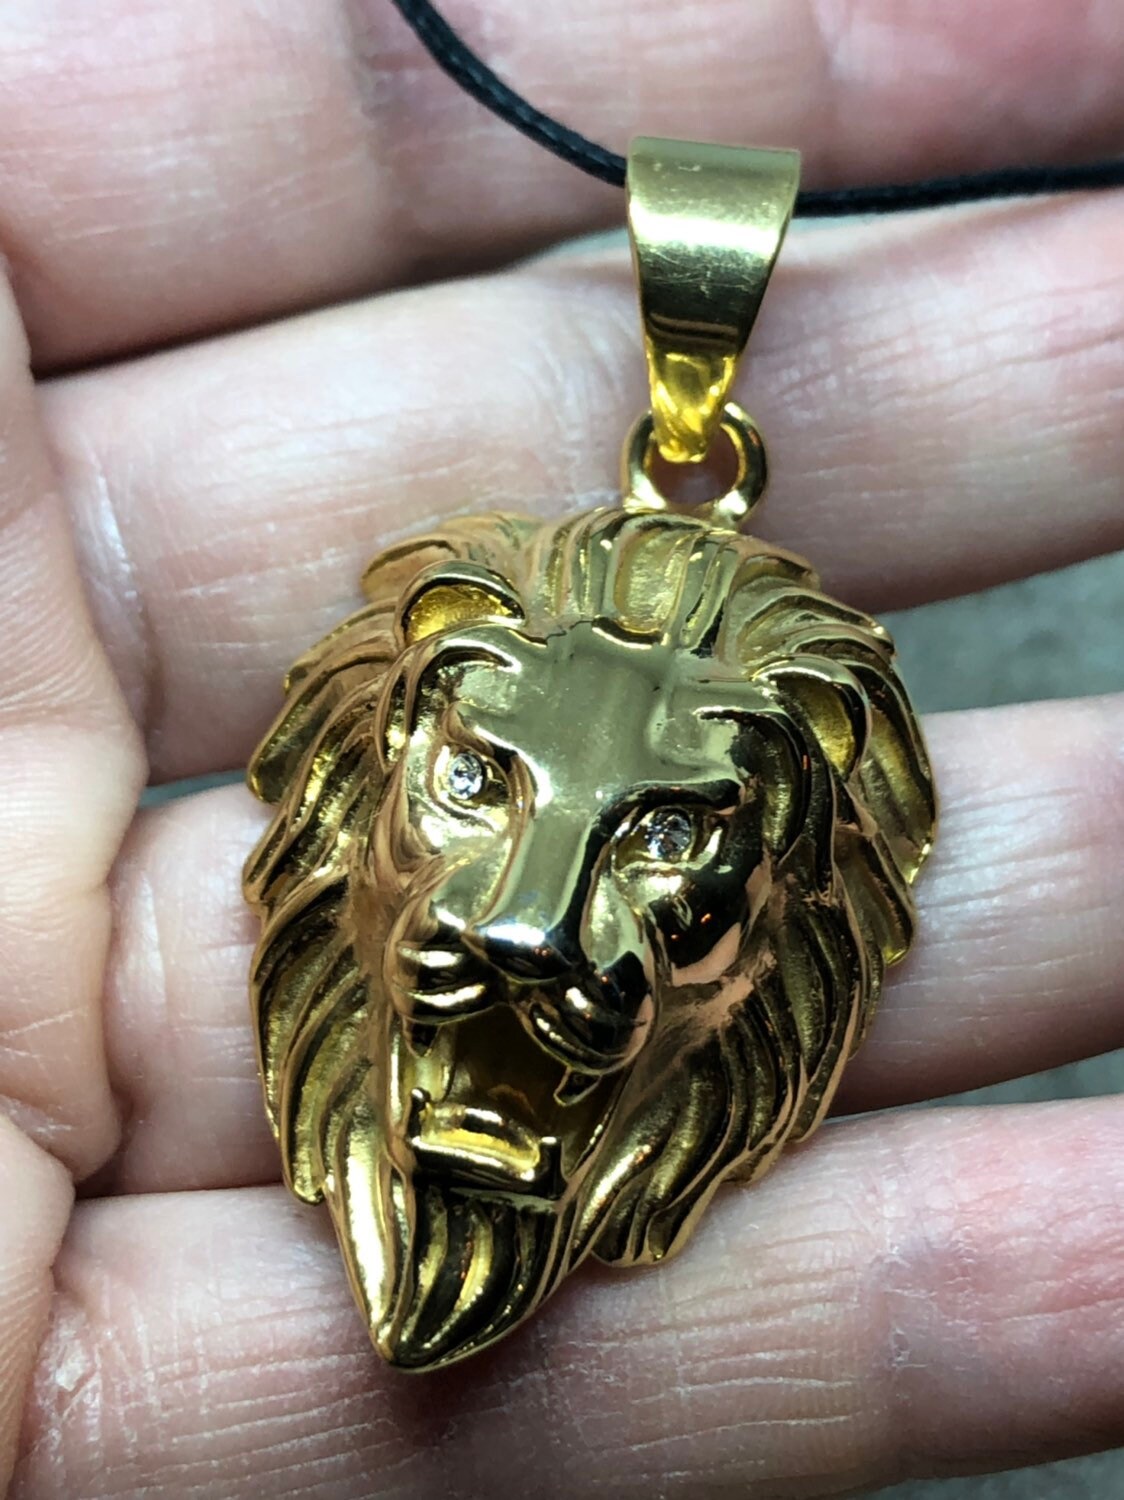 Vintage Golden Stainless Steel Lion Pendant Necklace